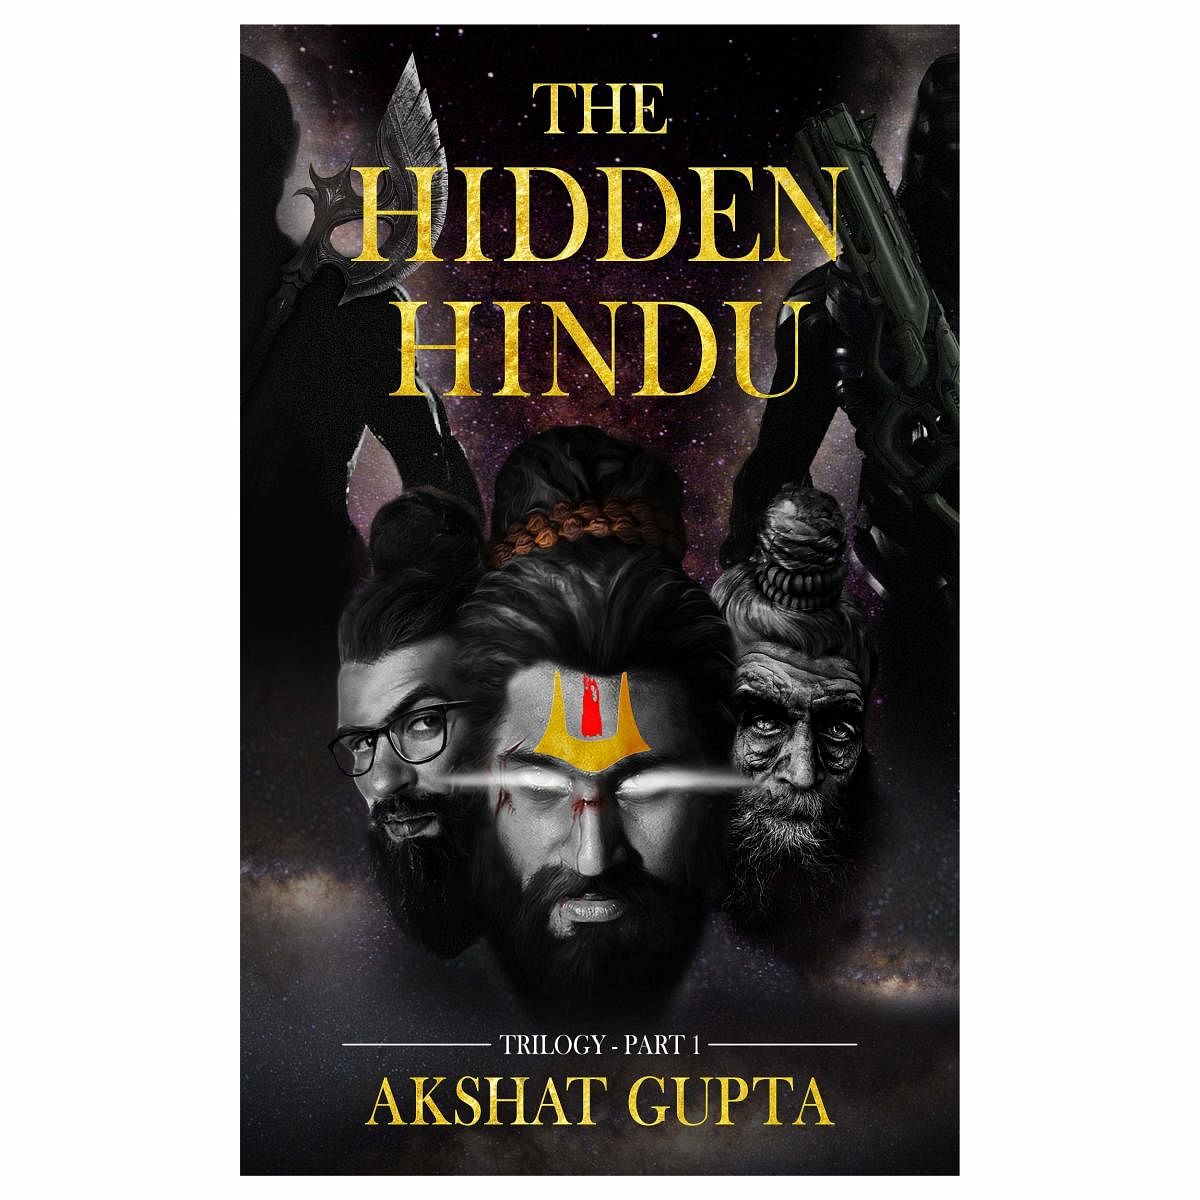 Hidden Hindu by Akshat Gupta